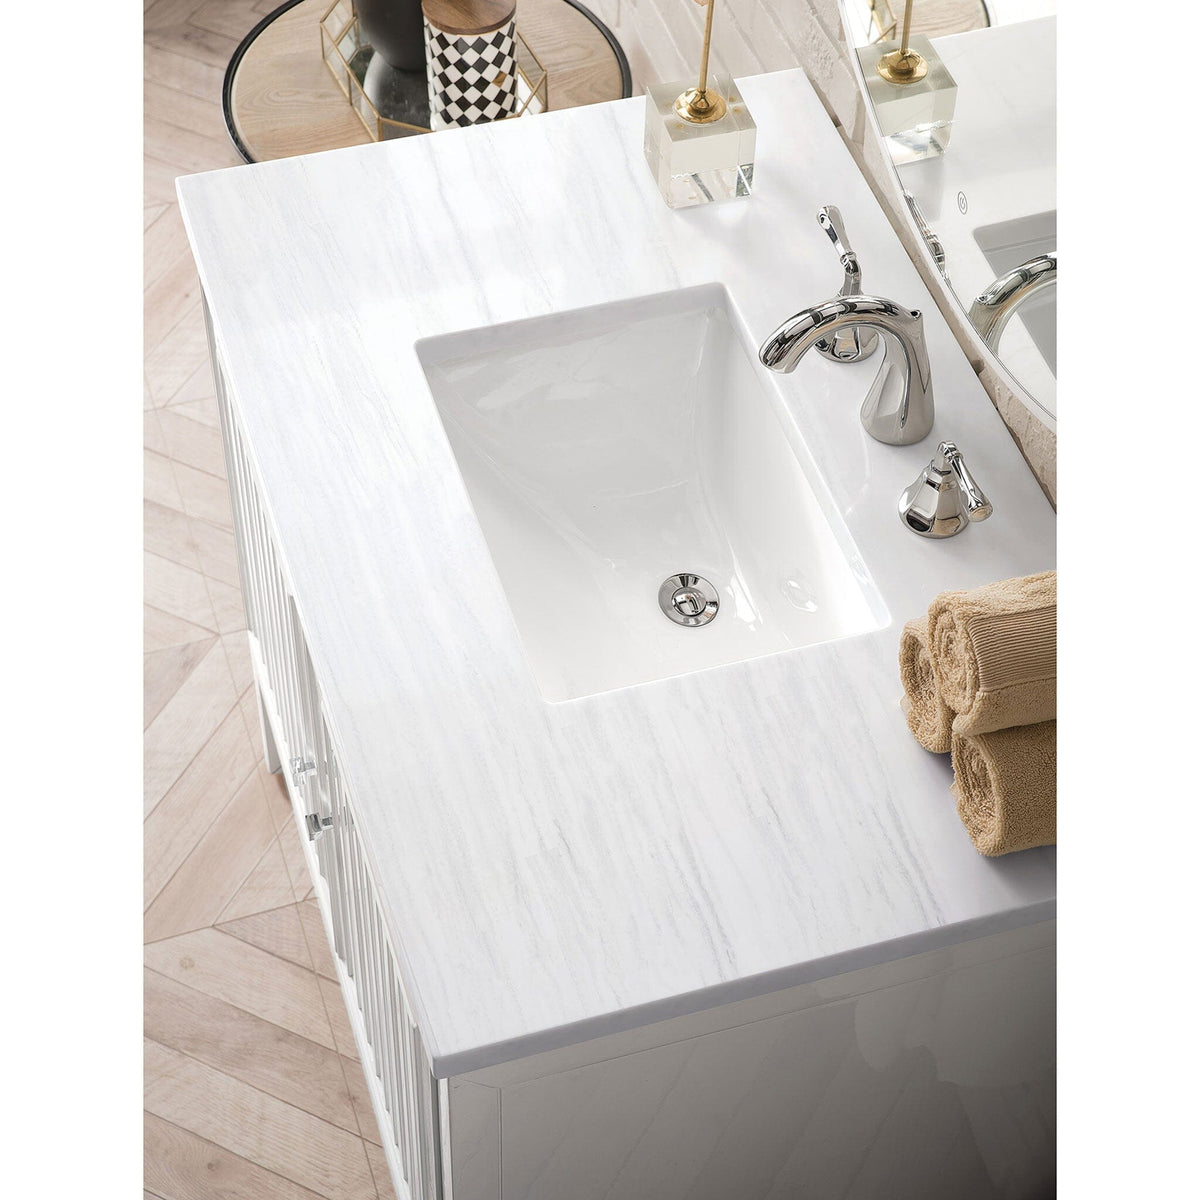 36" Athens Single Bathroom Vanity, Glossy White